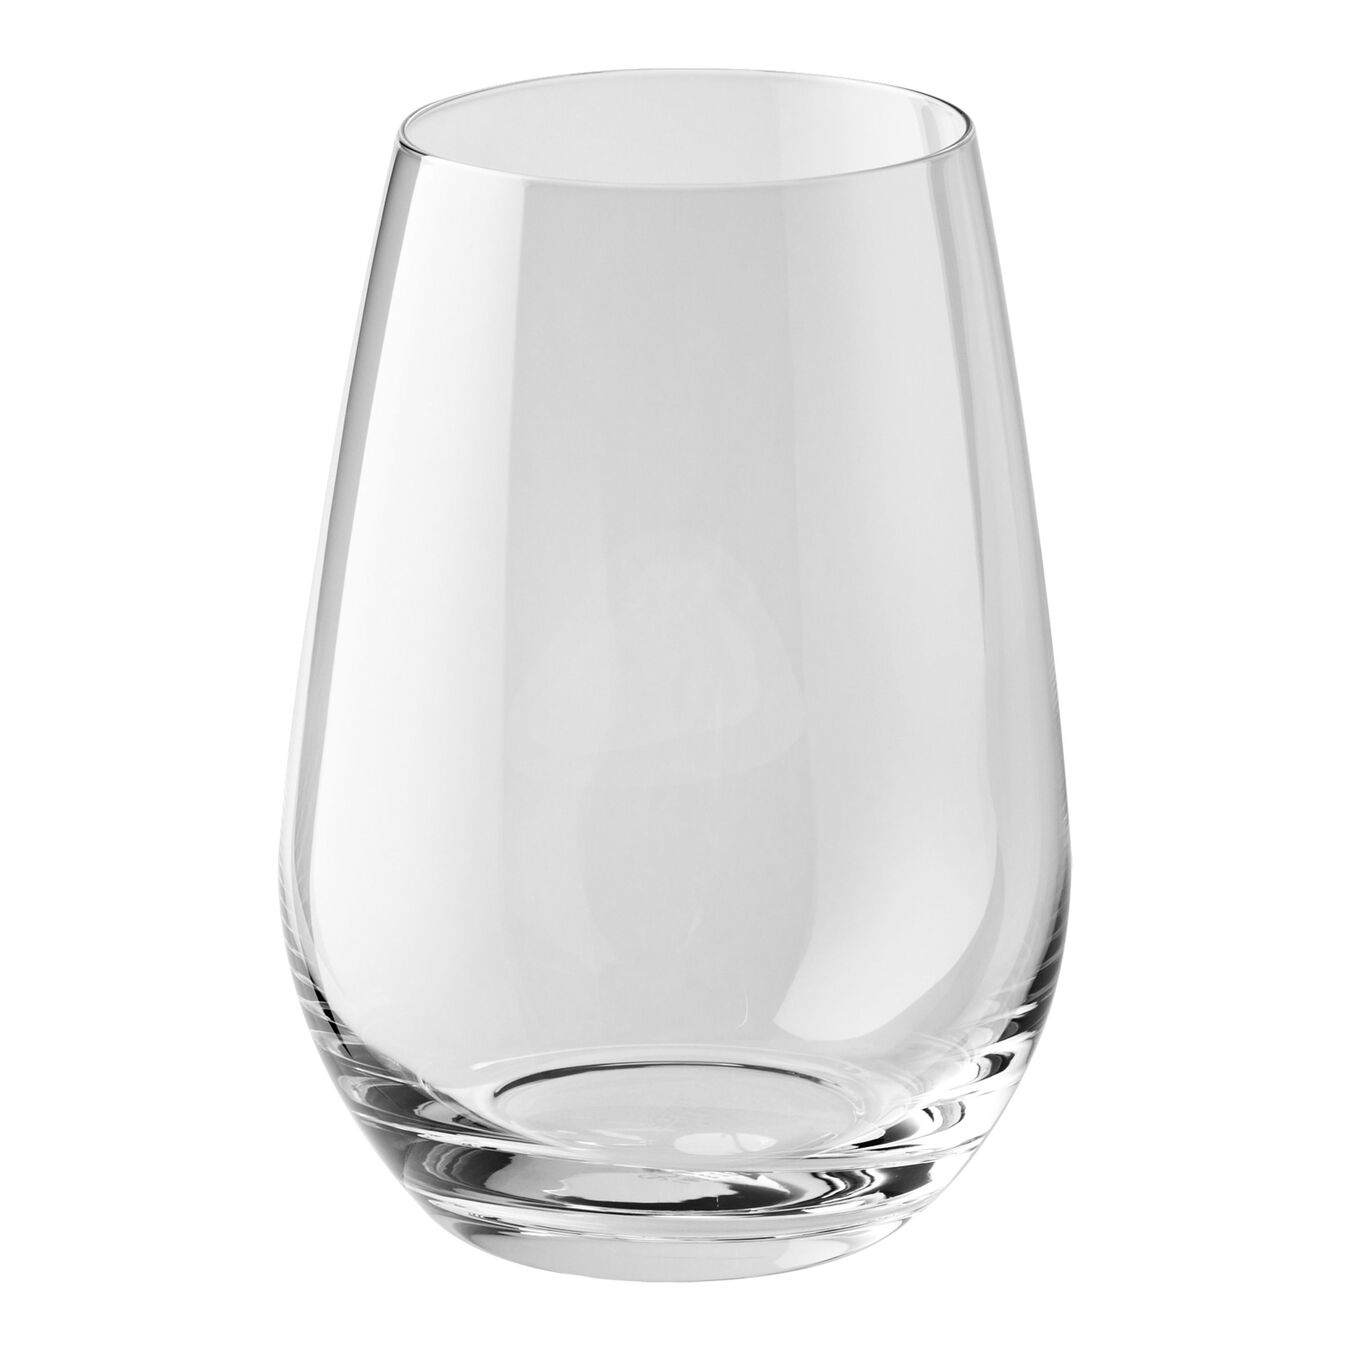 Cocktailglas 570 ml,,large 1